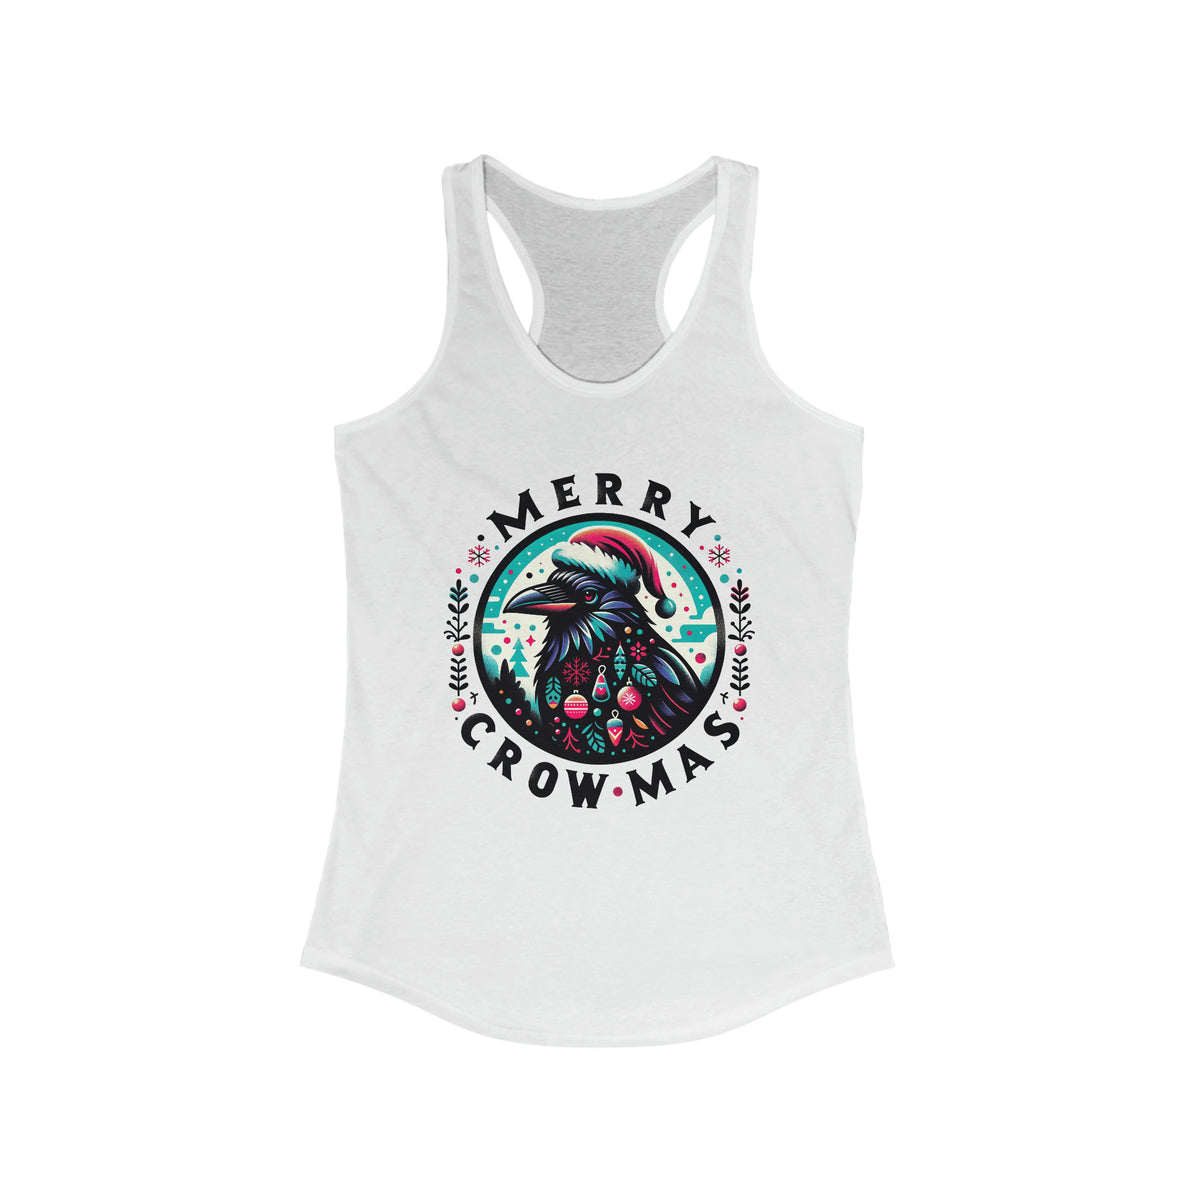 Merry Crow-mas Crow Christmas Shirt | Crow Animal Lover Gift | Christmas Crow | Women's Slim-fit Racerback Tank Top